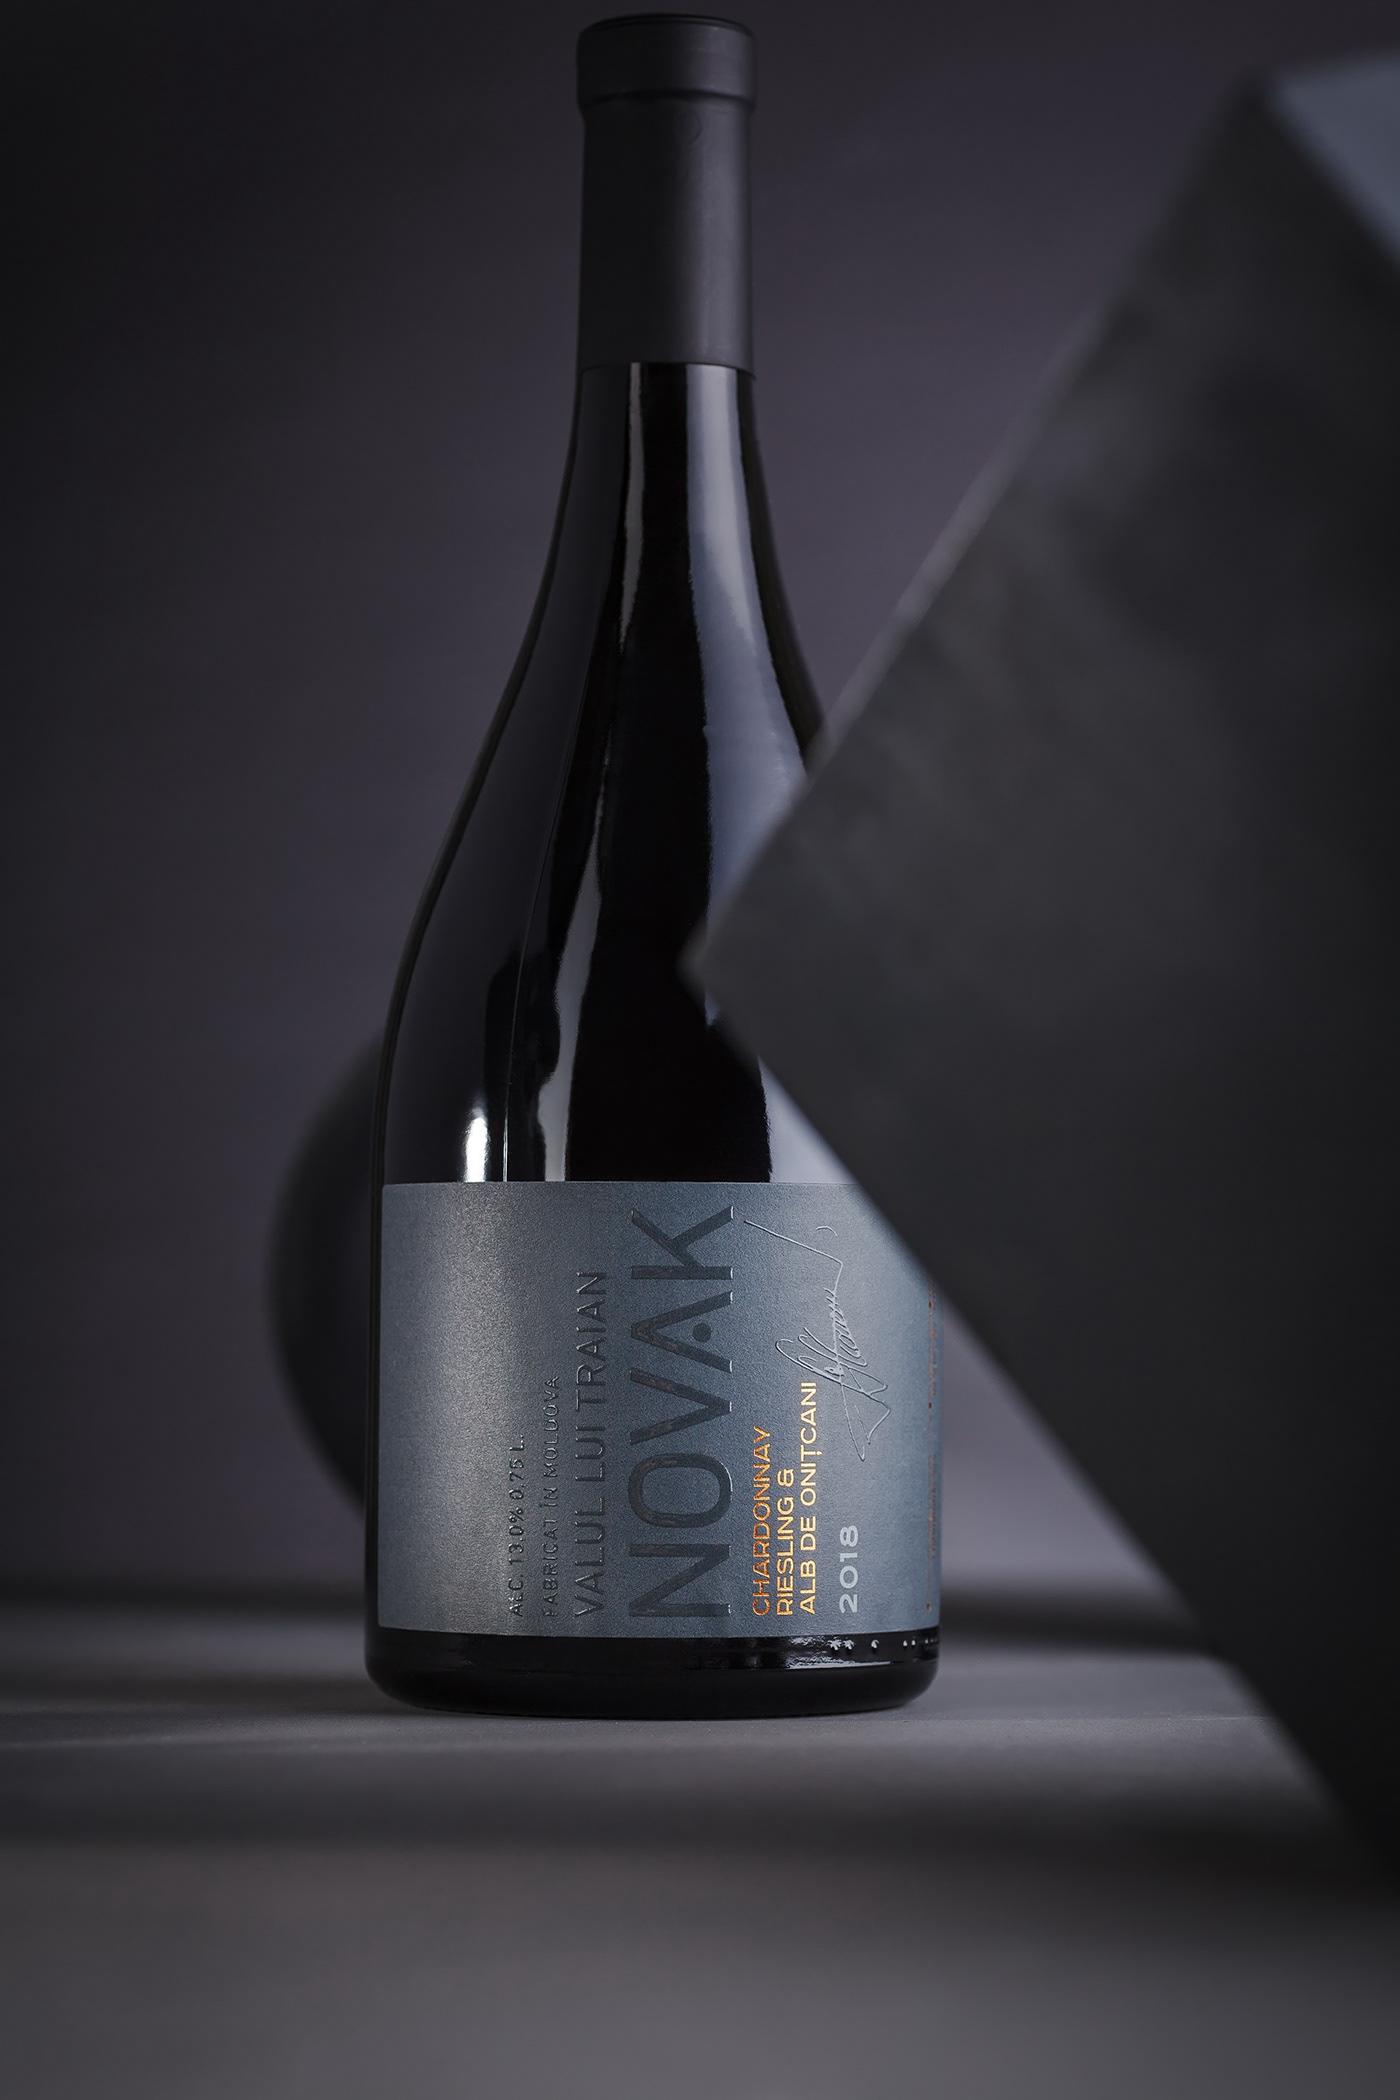 43oz design studio novak winery Moldova Packaging label design wine label premium wine Wine of Moldova gray